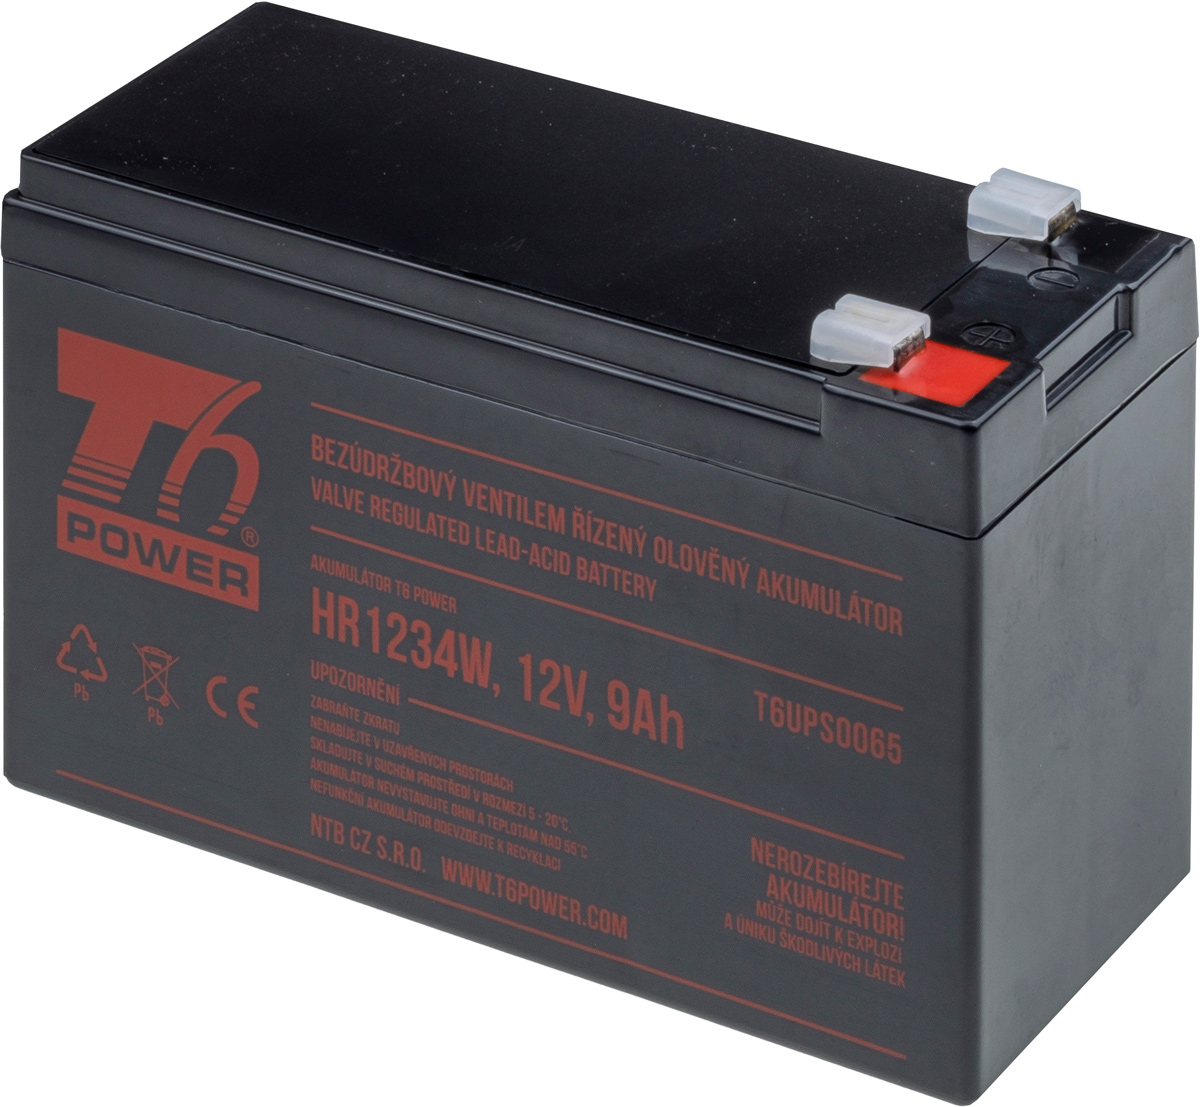 T6 Power RBC17 - battery KIT